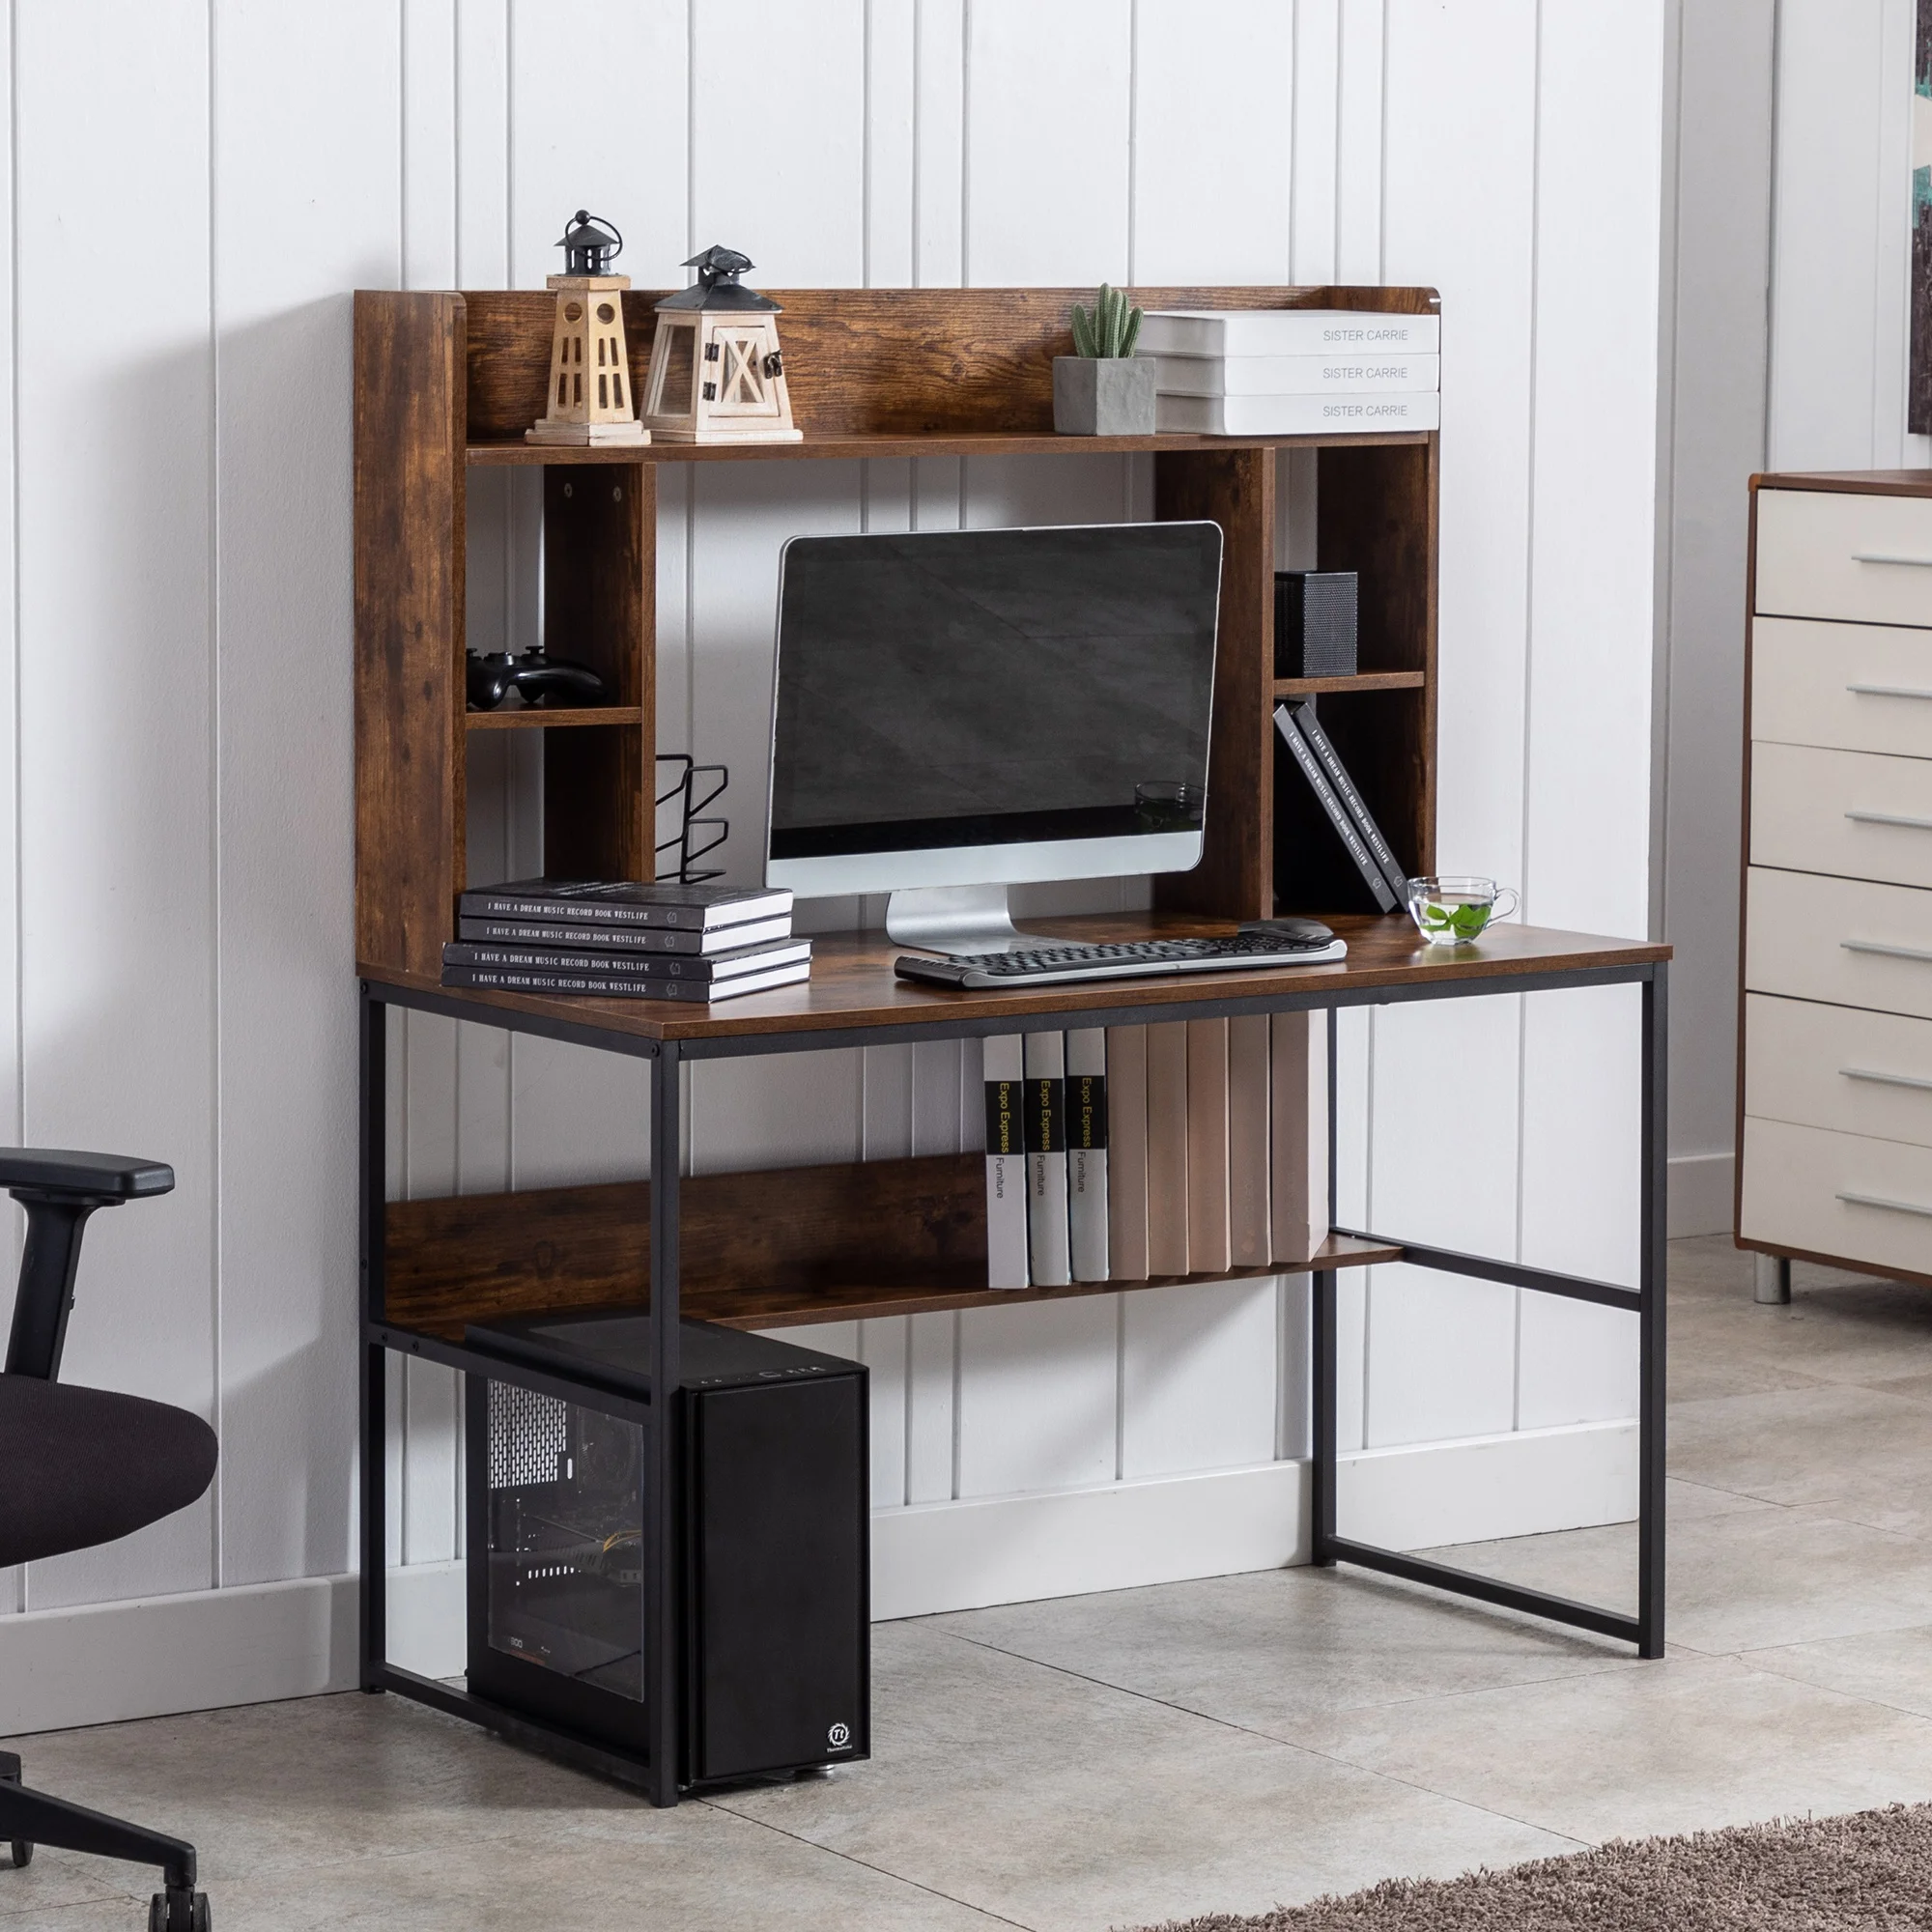 

Home Office Desk Large Workstation with Storage Shelves, 47 inch Study Table with Hutch, Brown Desktop Black Frame